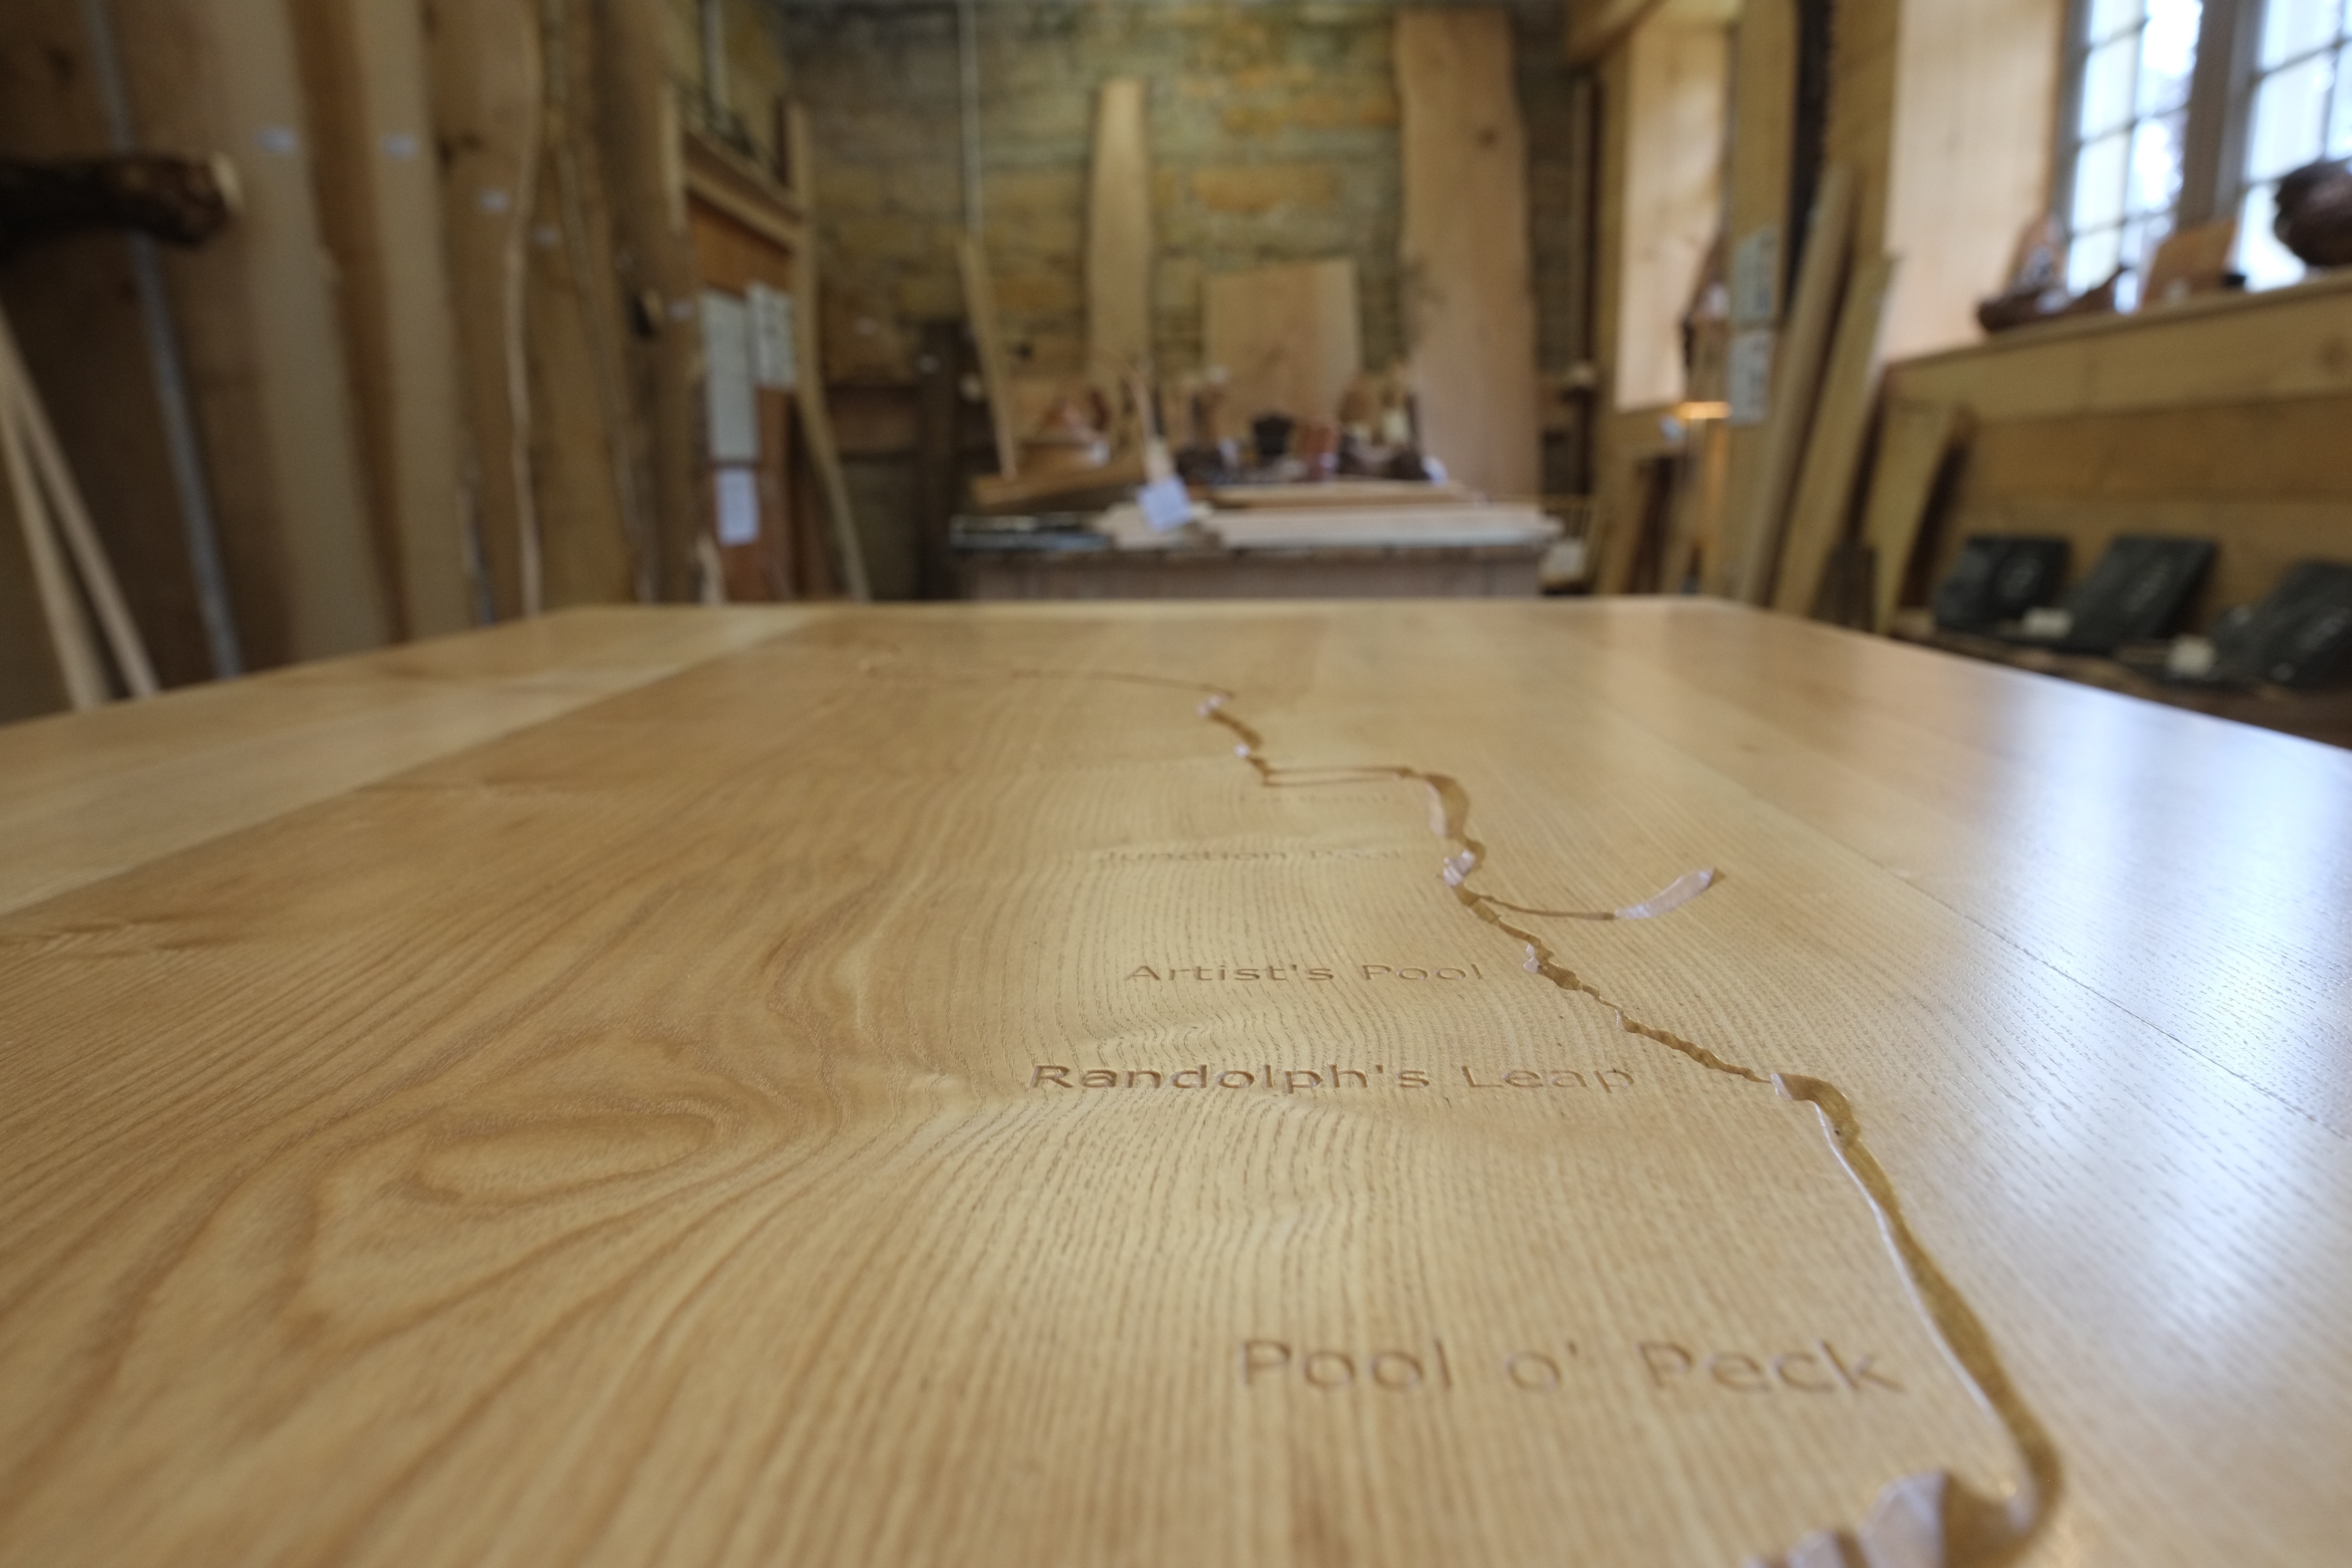 River Table in the Boardroom closeup